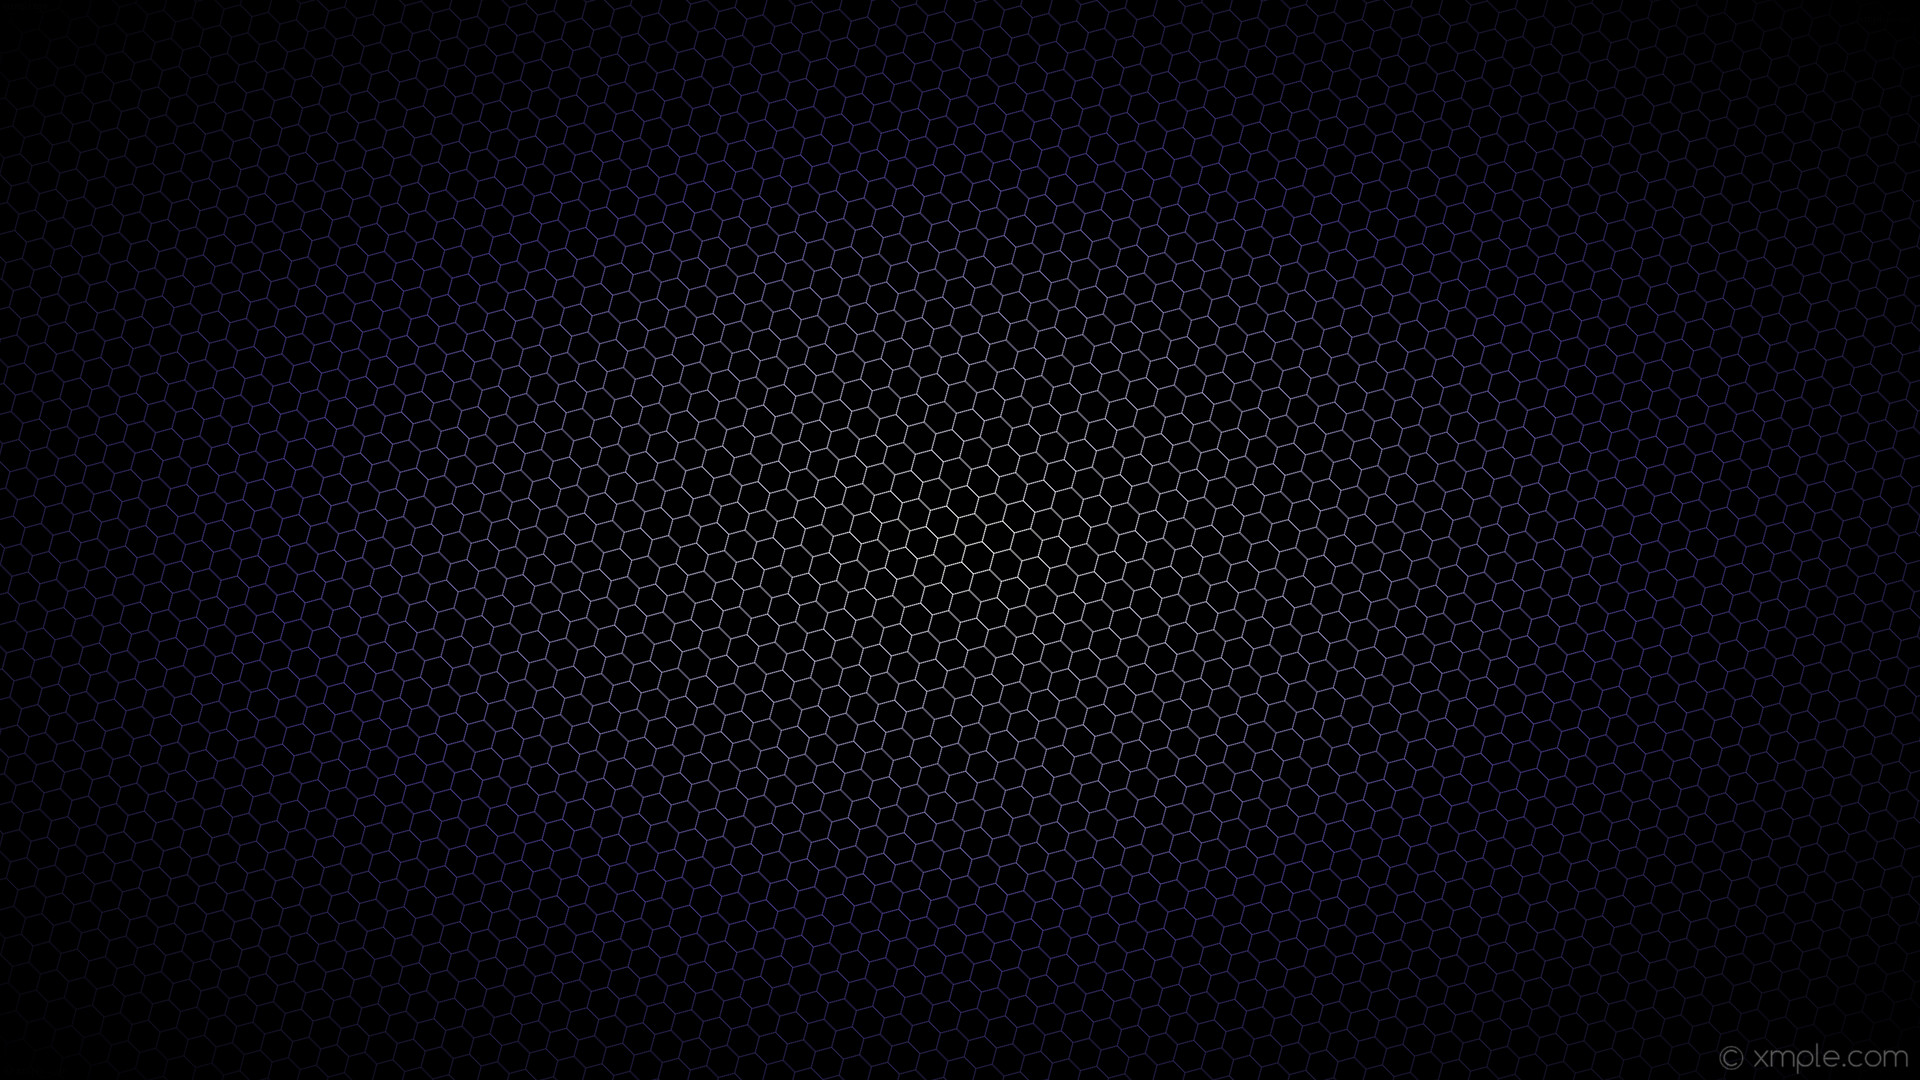 1920x1080 wallpaper black white hexagon purple glow gradient dark slate blue #000000  #ffffff #483d8b